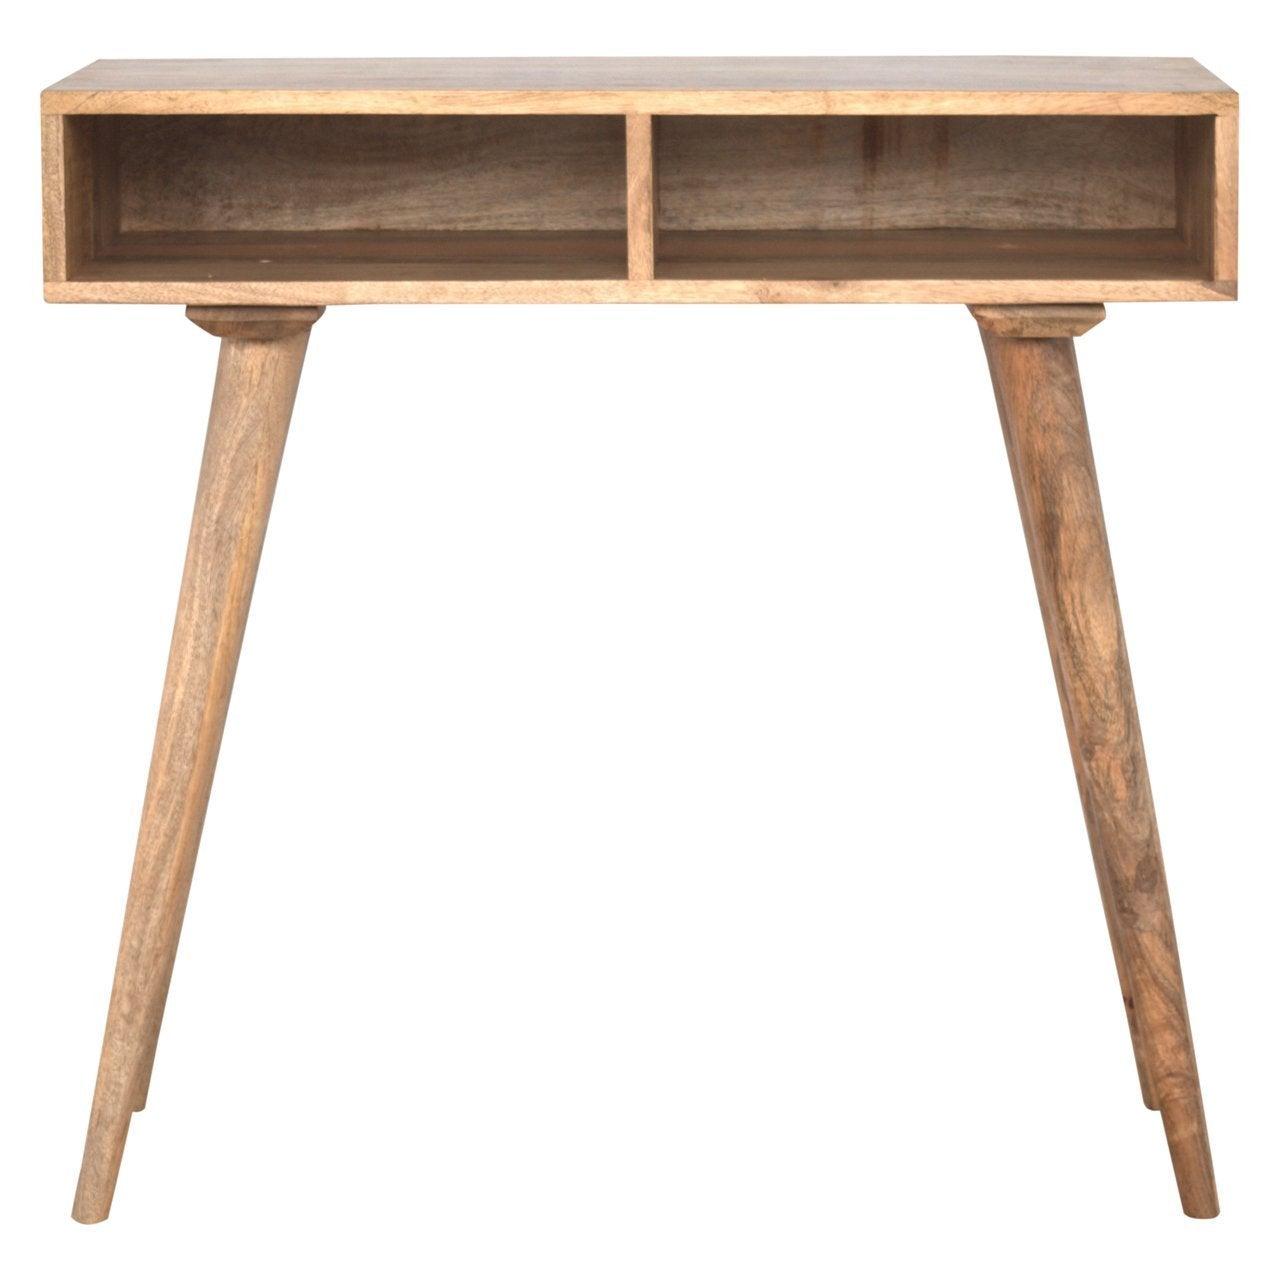 Nordic style open shelf writing desk - crimblefest furniture - image 1